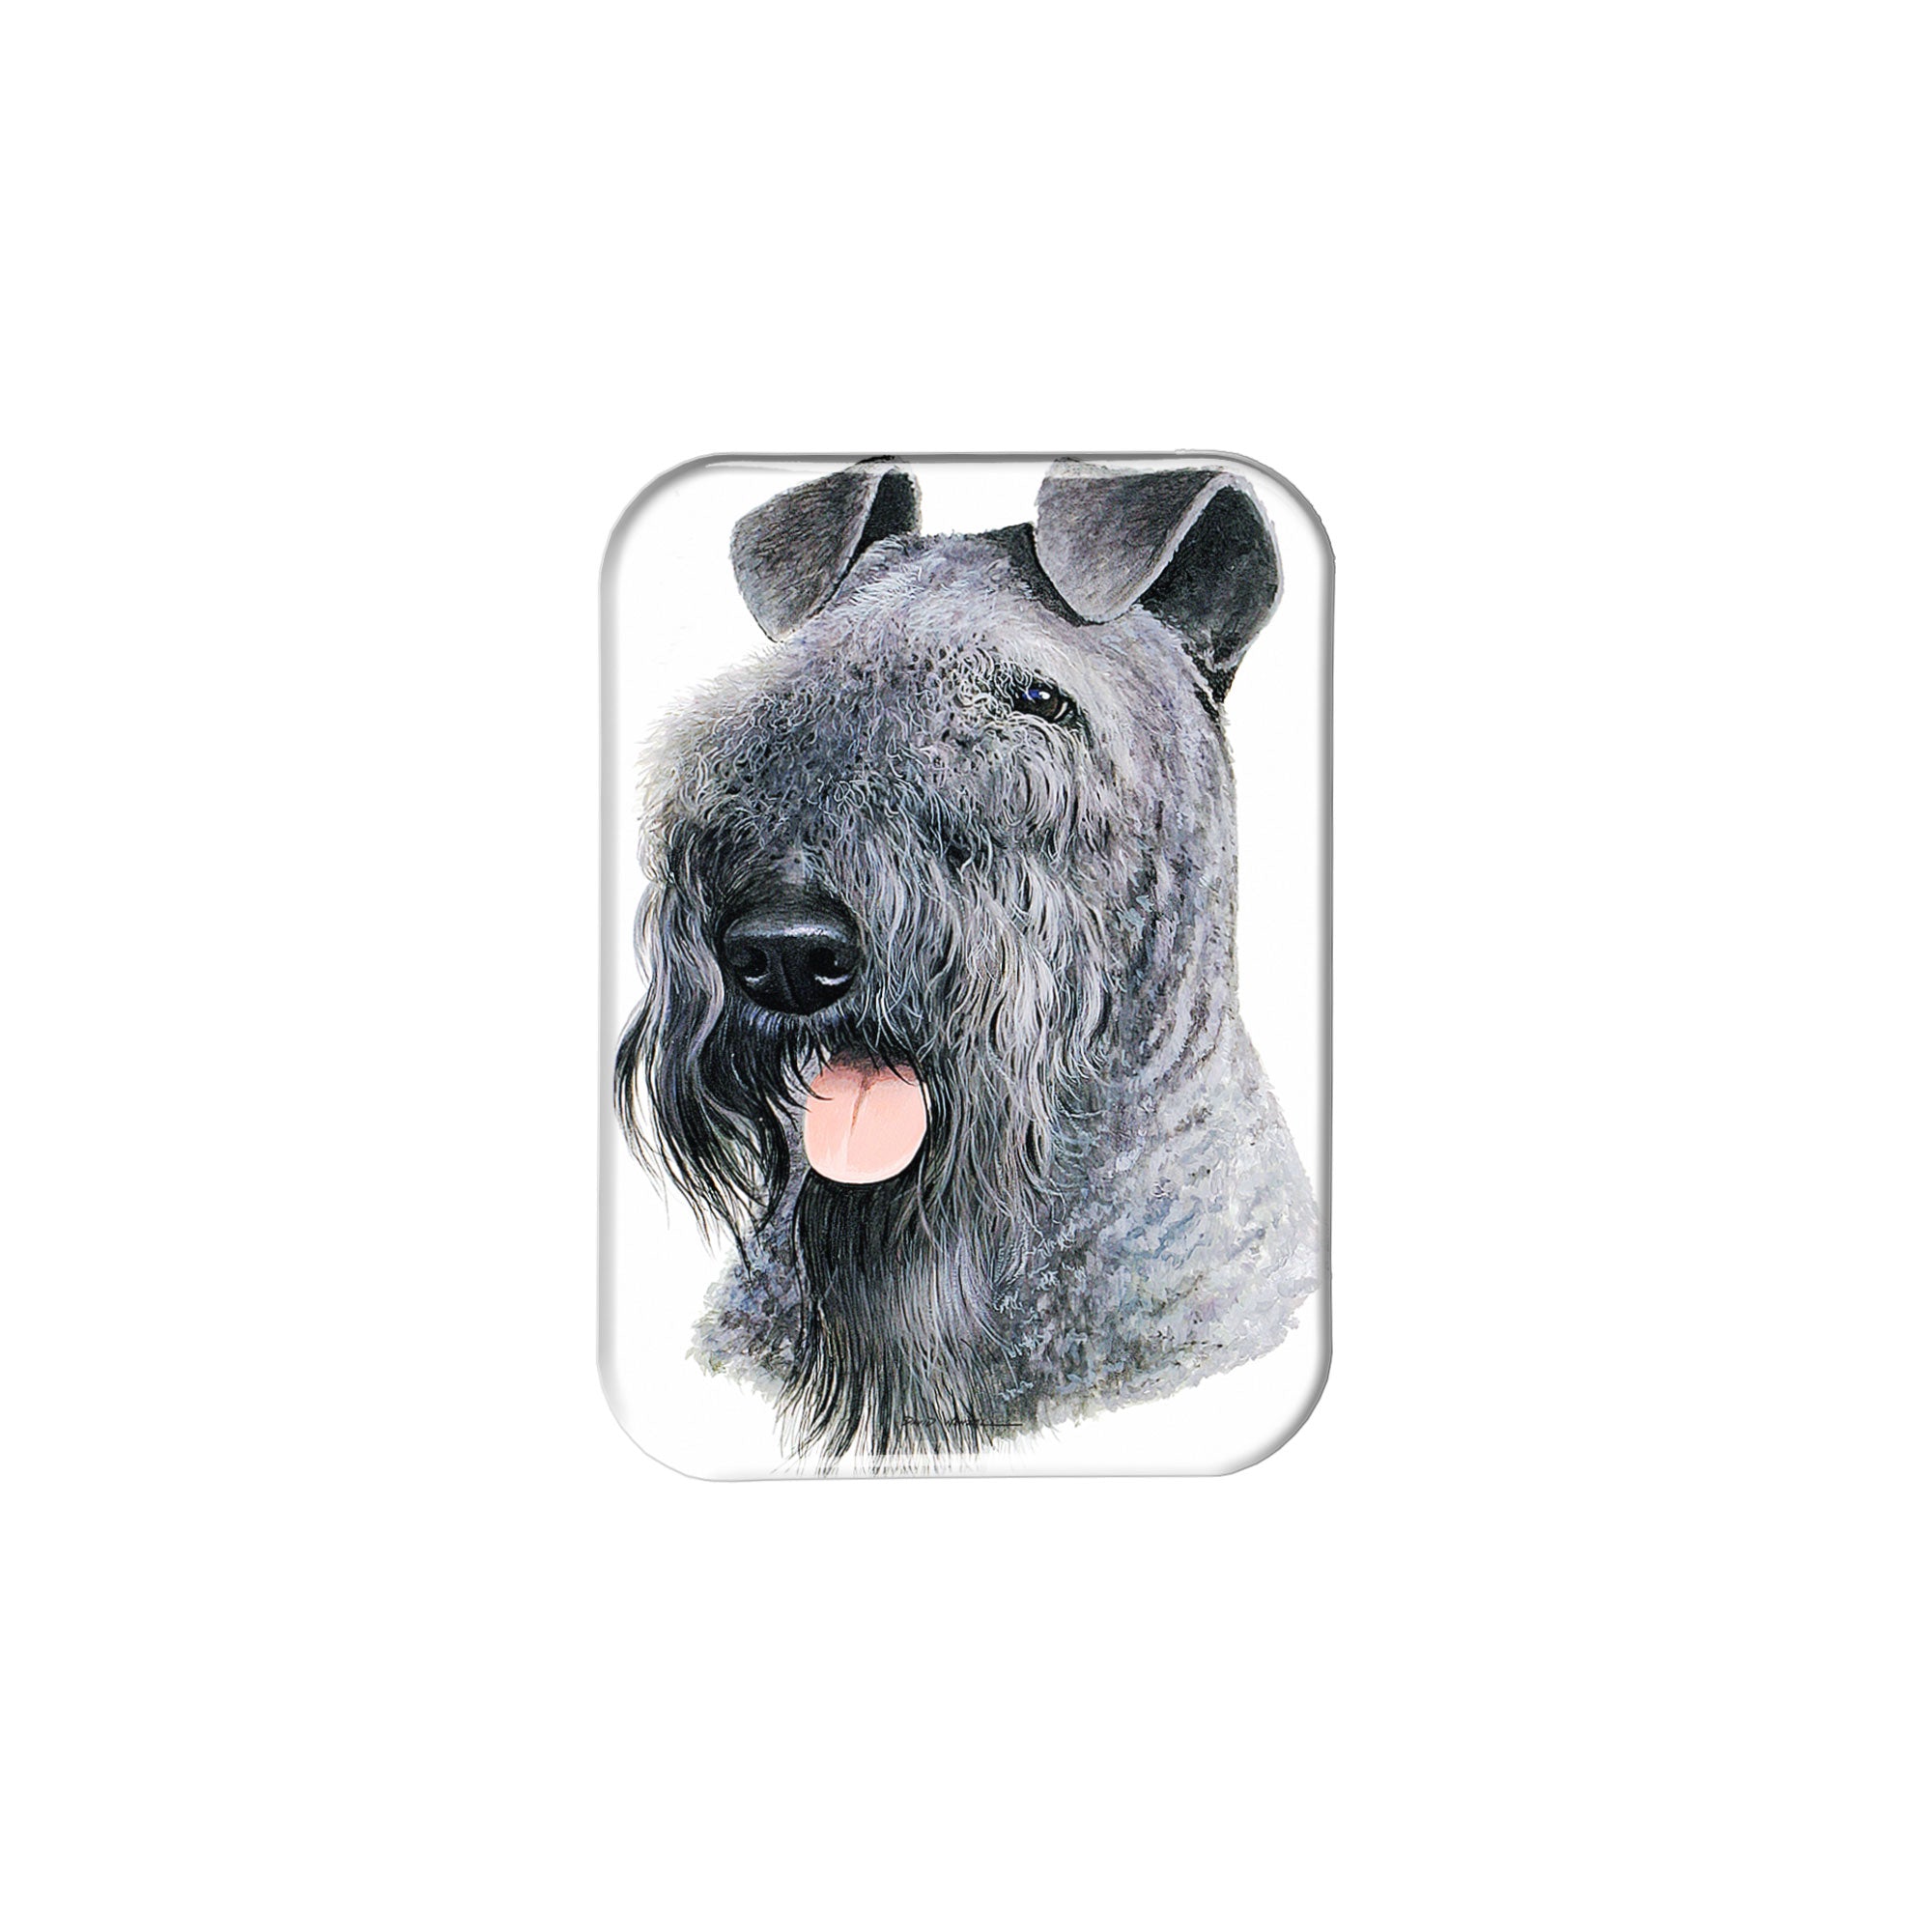 "Kerry Blue Terrier" - 2.5" X 3.5" Rectangle Fridge Magnets